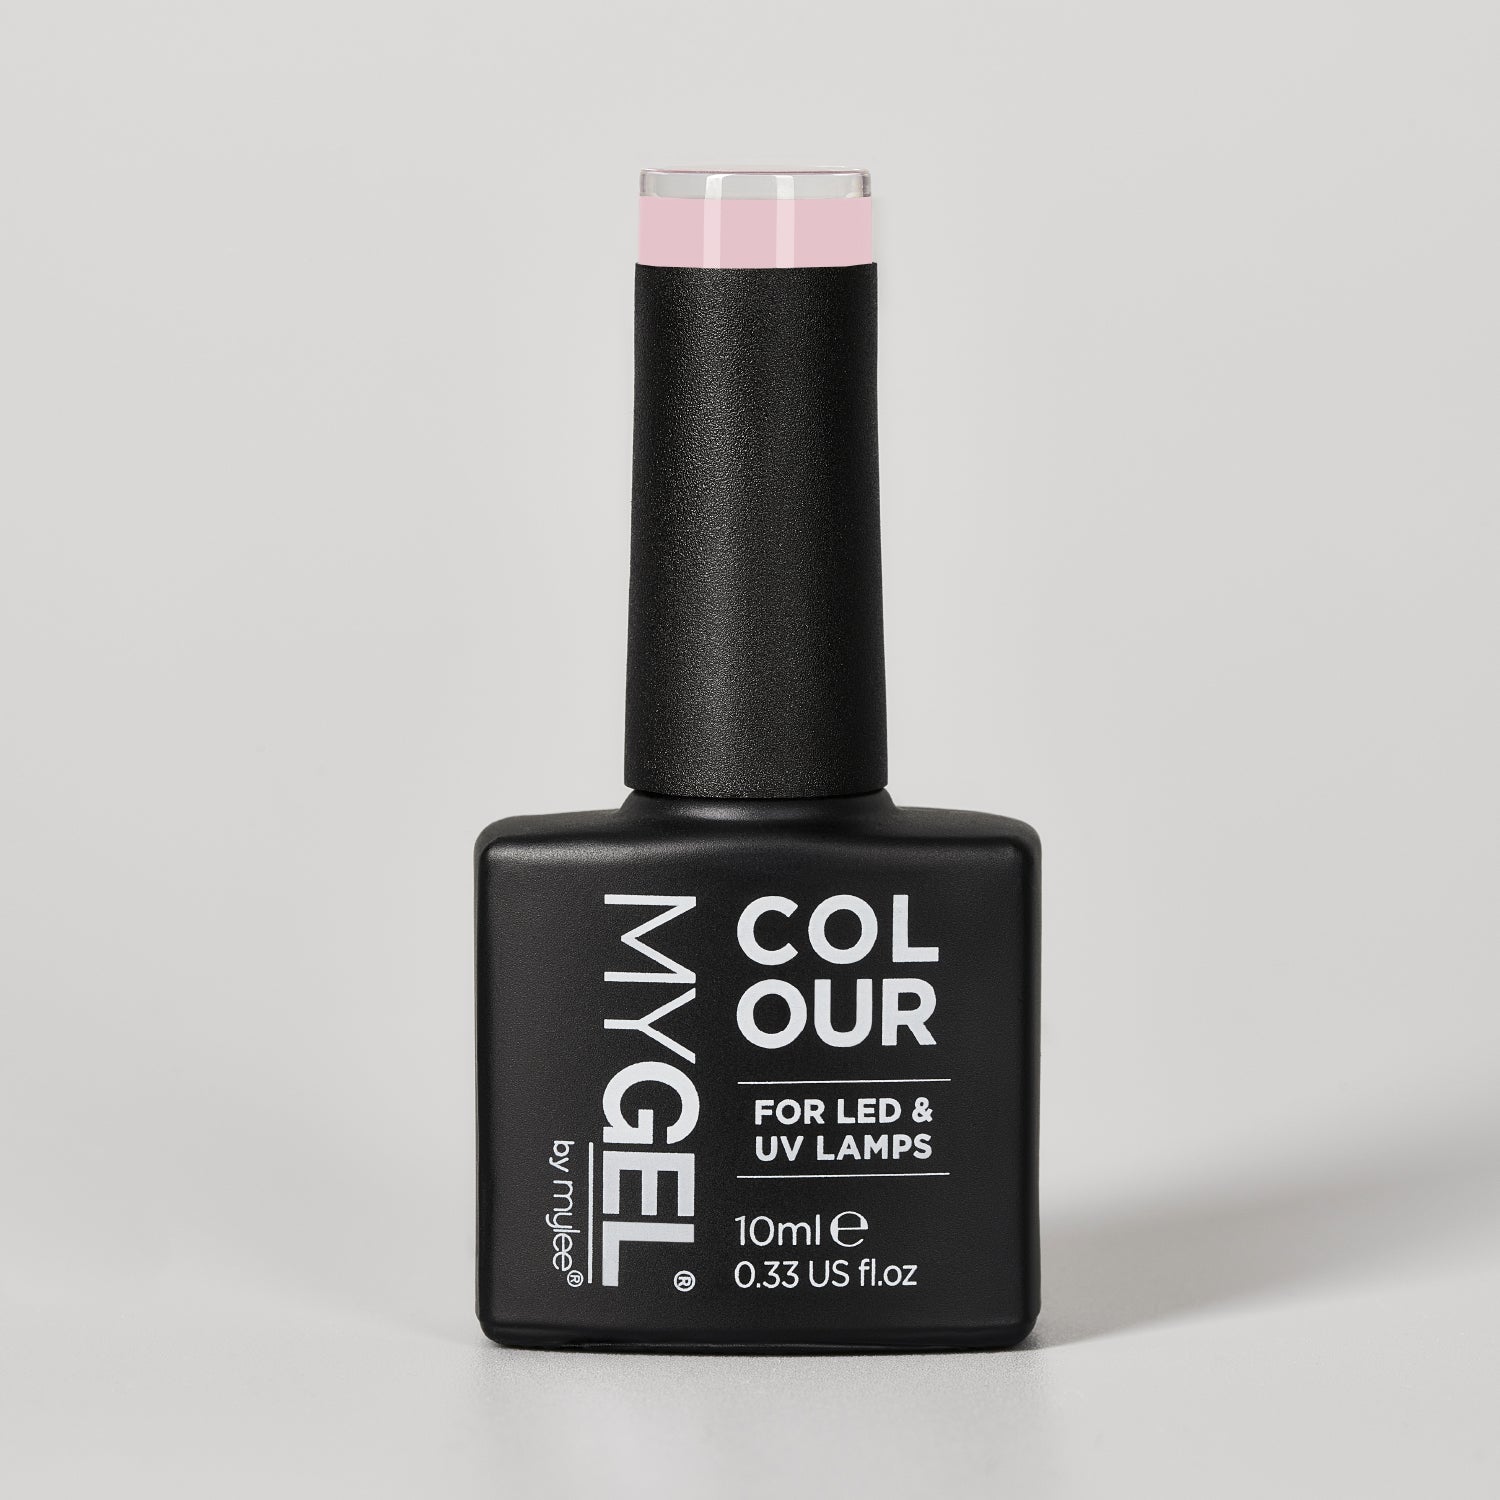 Mylee Primrose Hill LED/UV Pink / Nude Gel Nail Polish 10ml – Long Lasting At Home Manicure/Pedicure, High Gloss And Chip Free Wear Nail Varnish